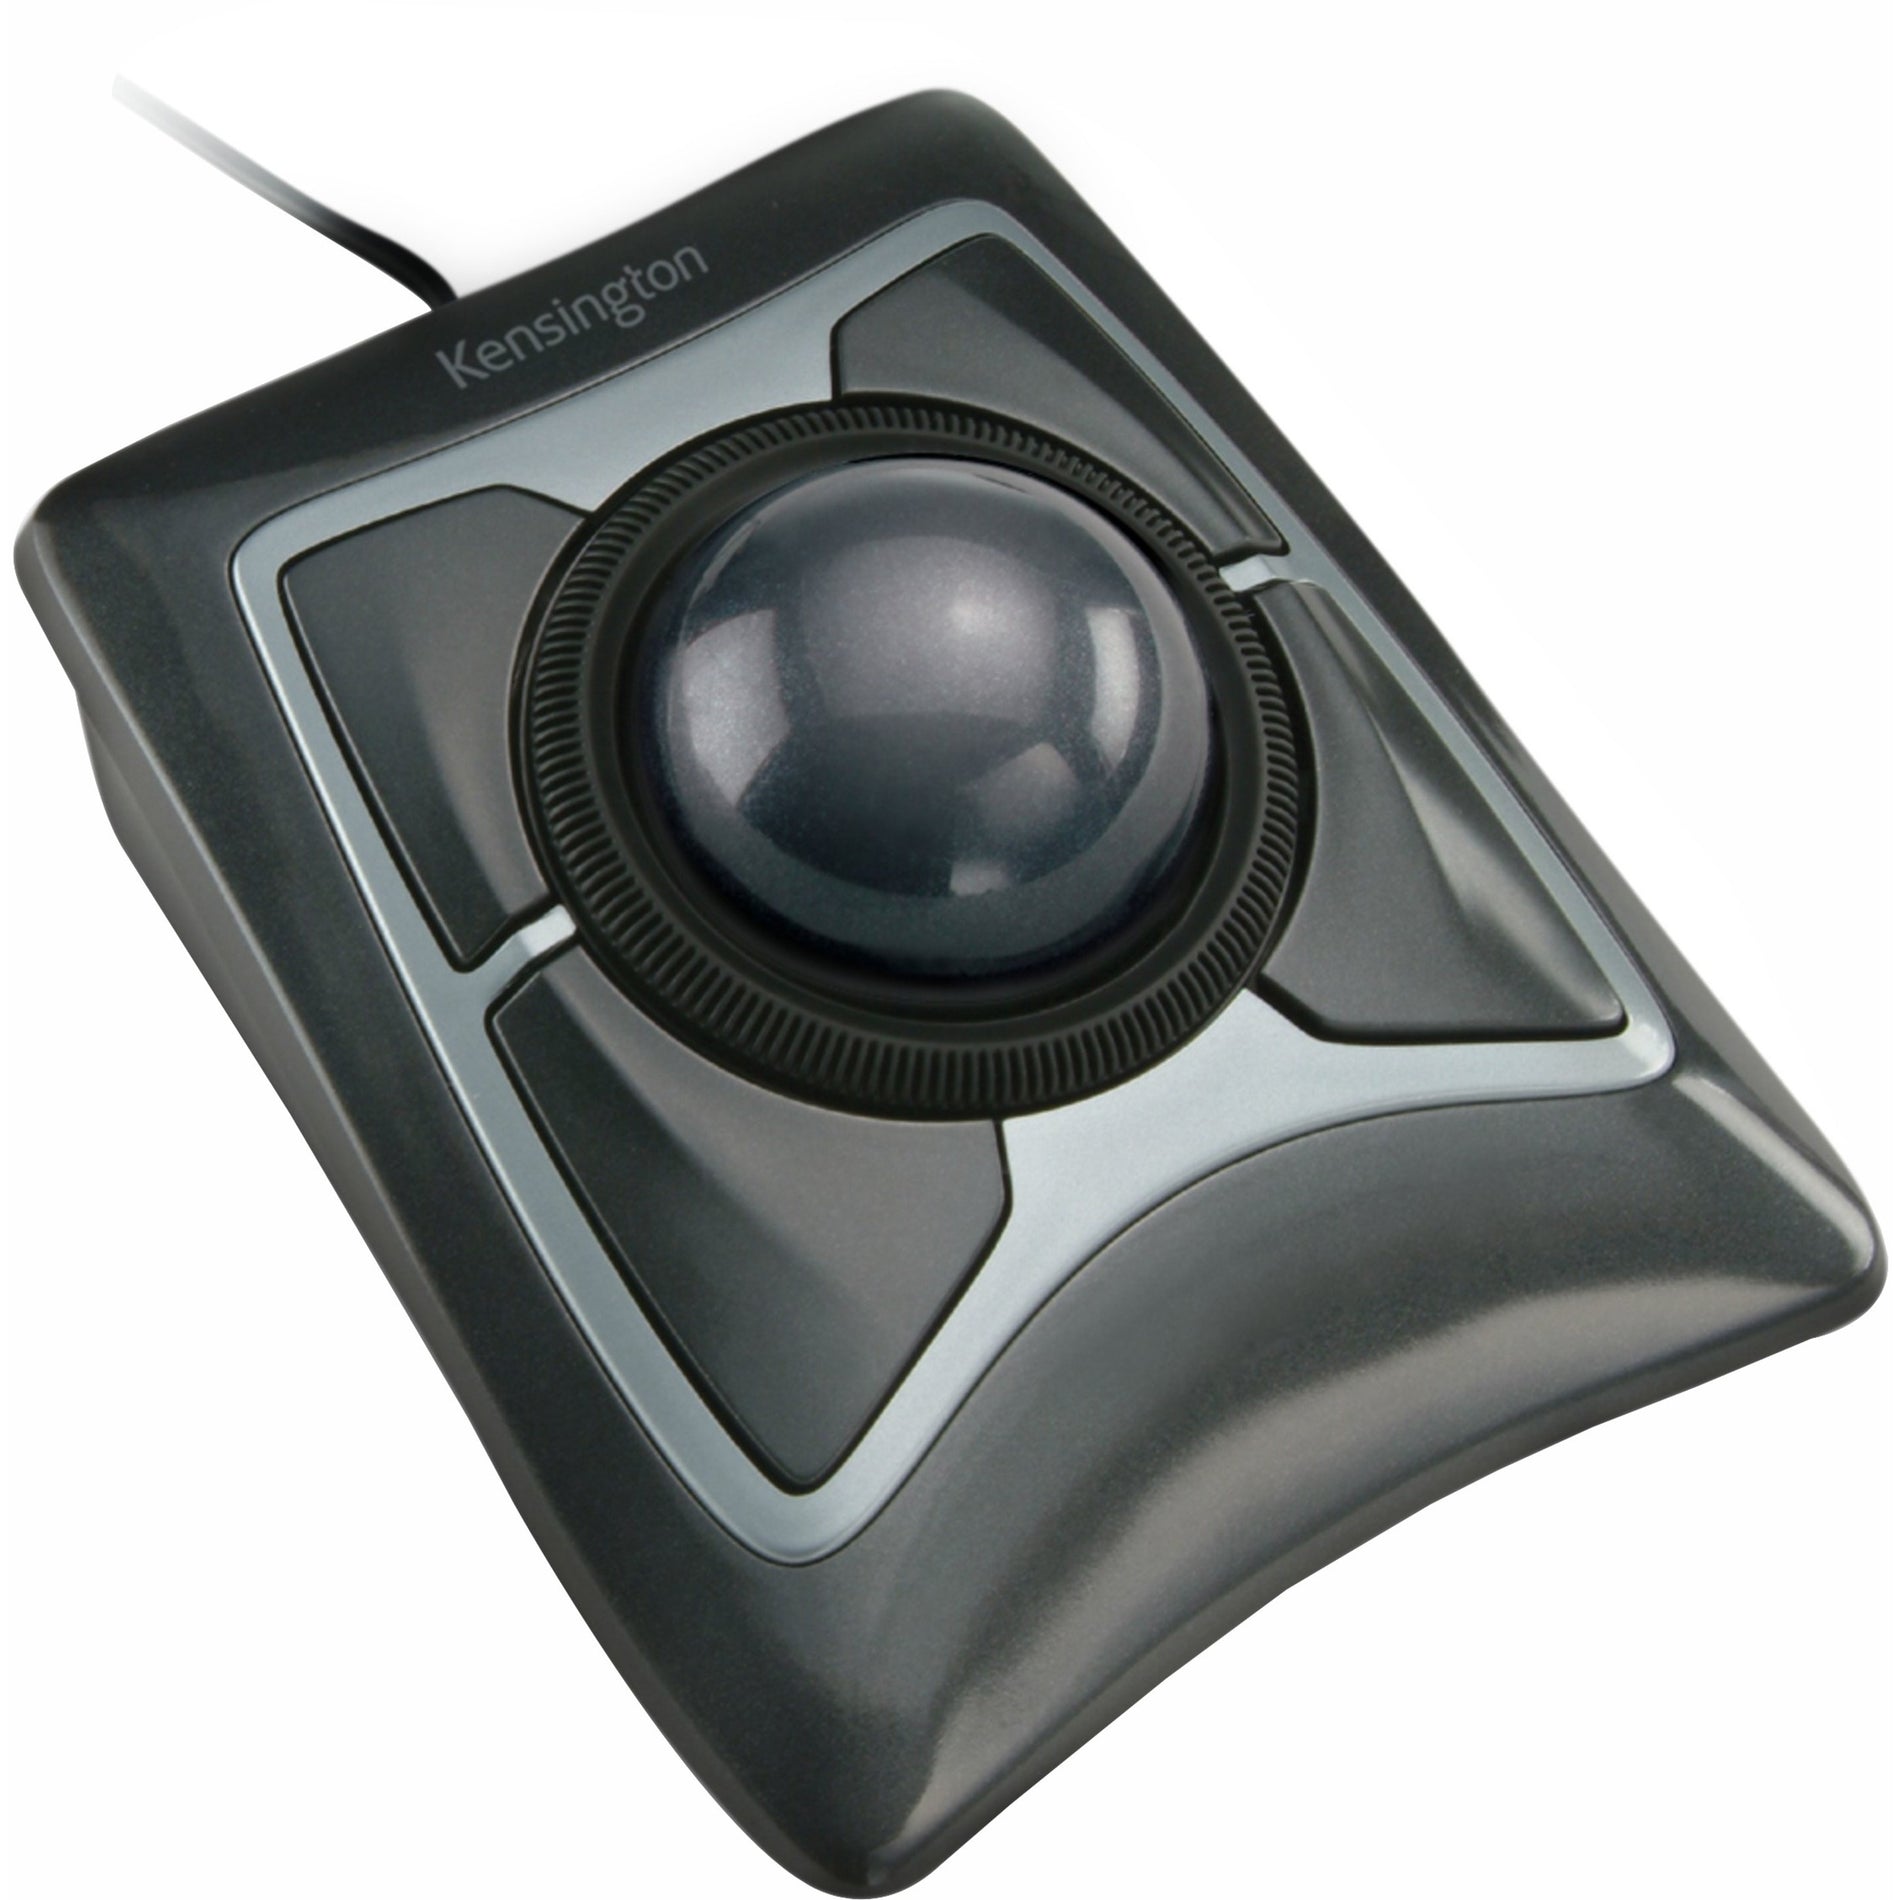 Kensington K64325 Expert Mouse Wired Trackball, Ergonomic Symmetrical Design, Optical USB, 5 Year Warranty